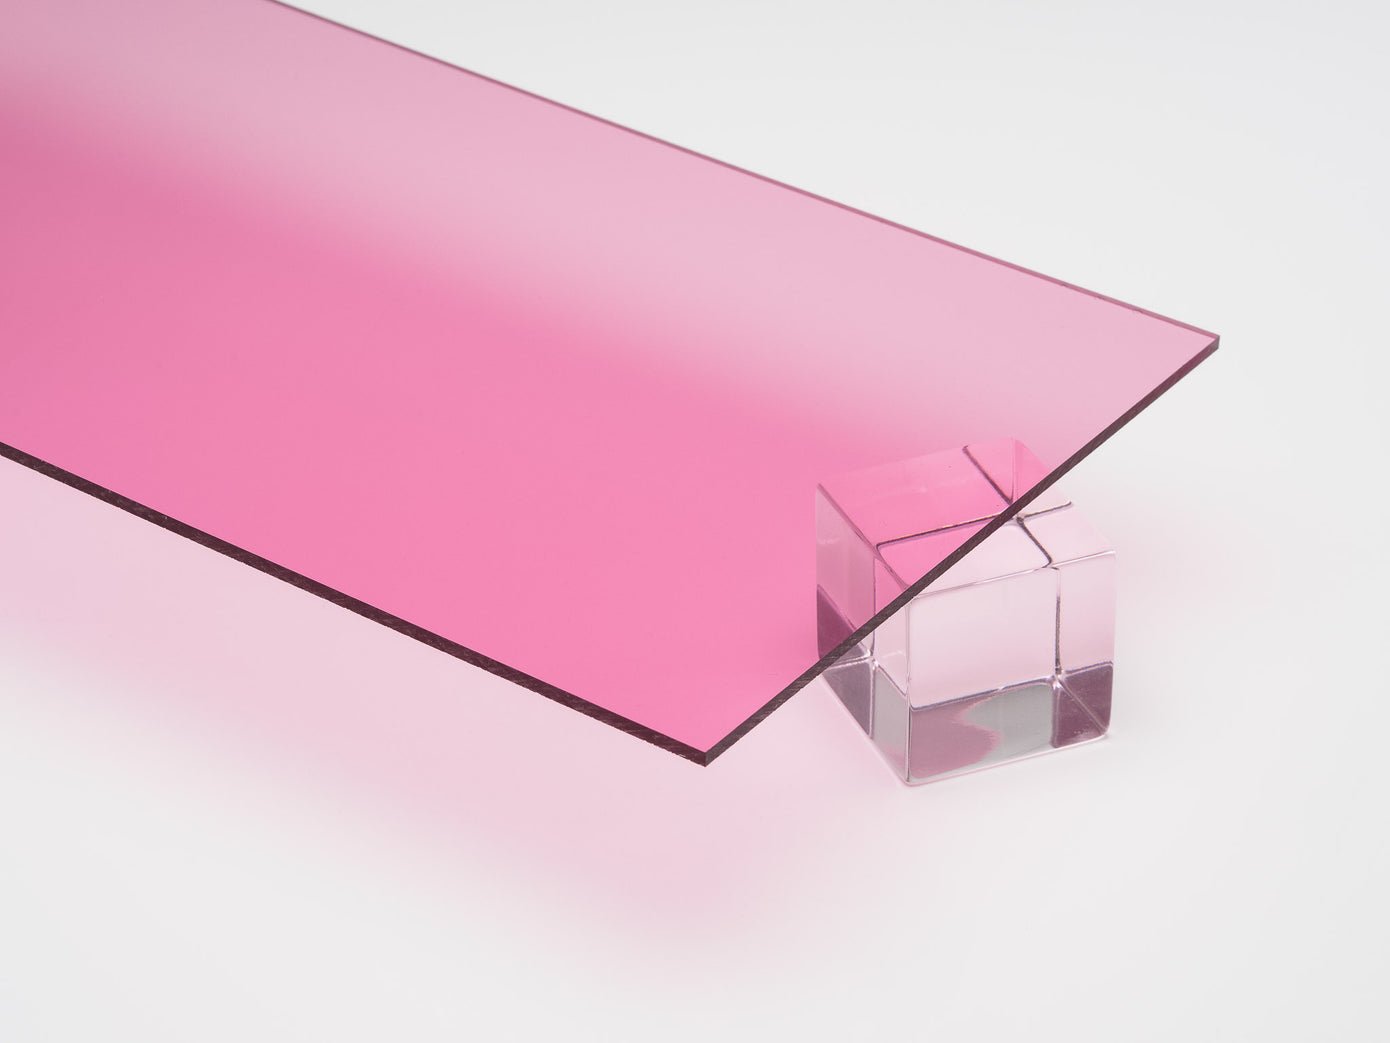 Delights Details Fluorescent Pink Acrylic Sheet – Delightful Details